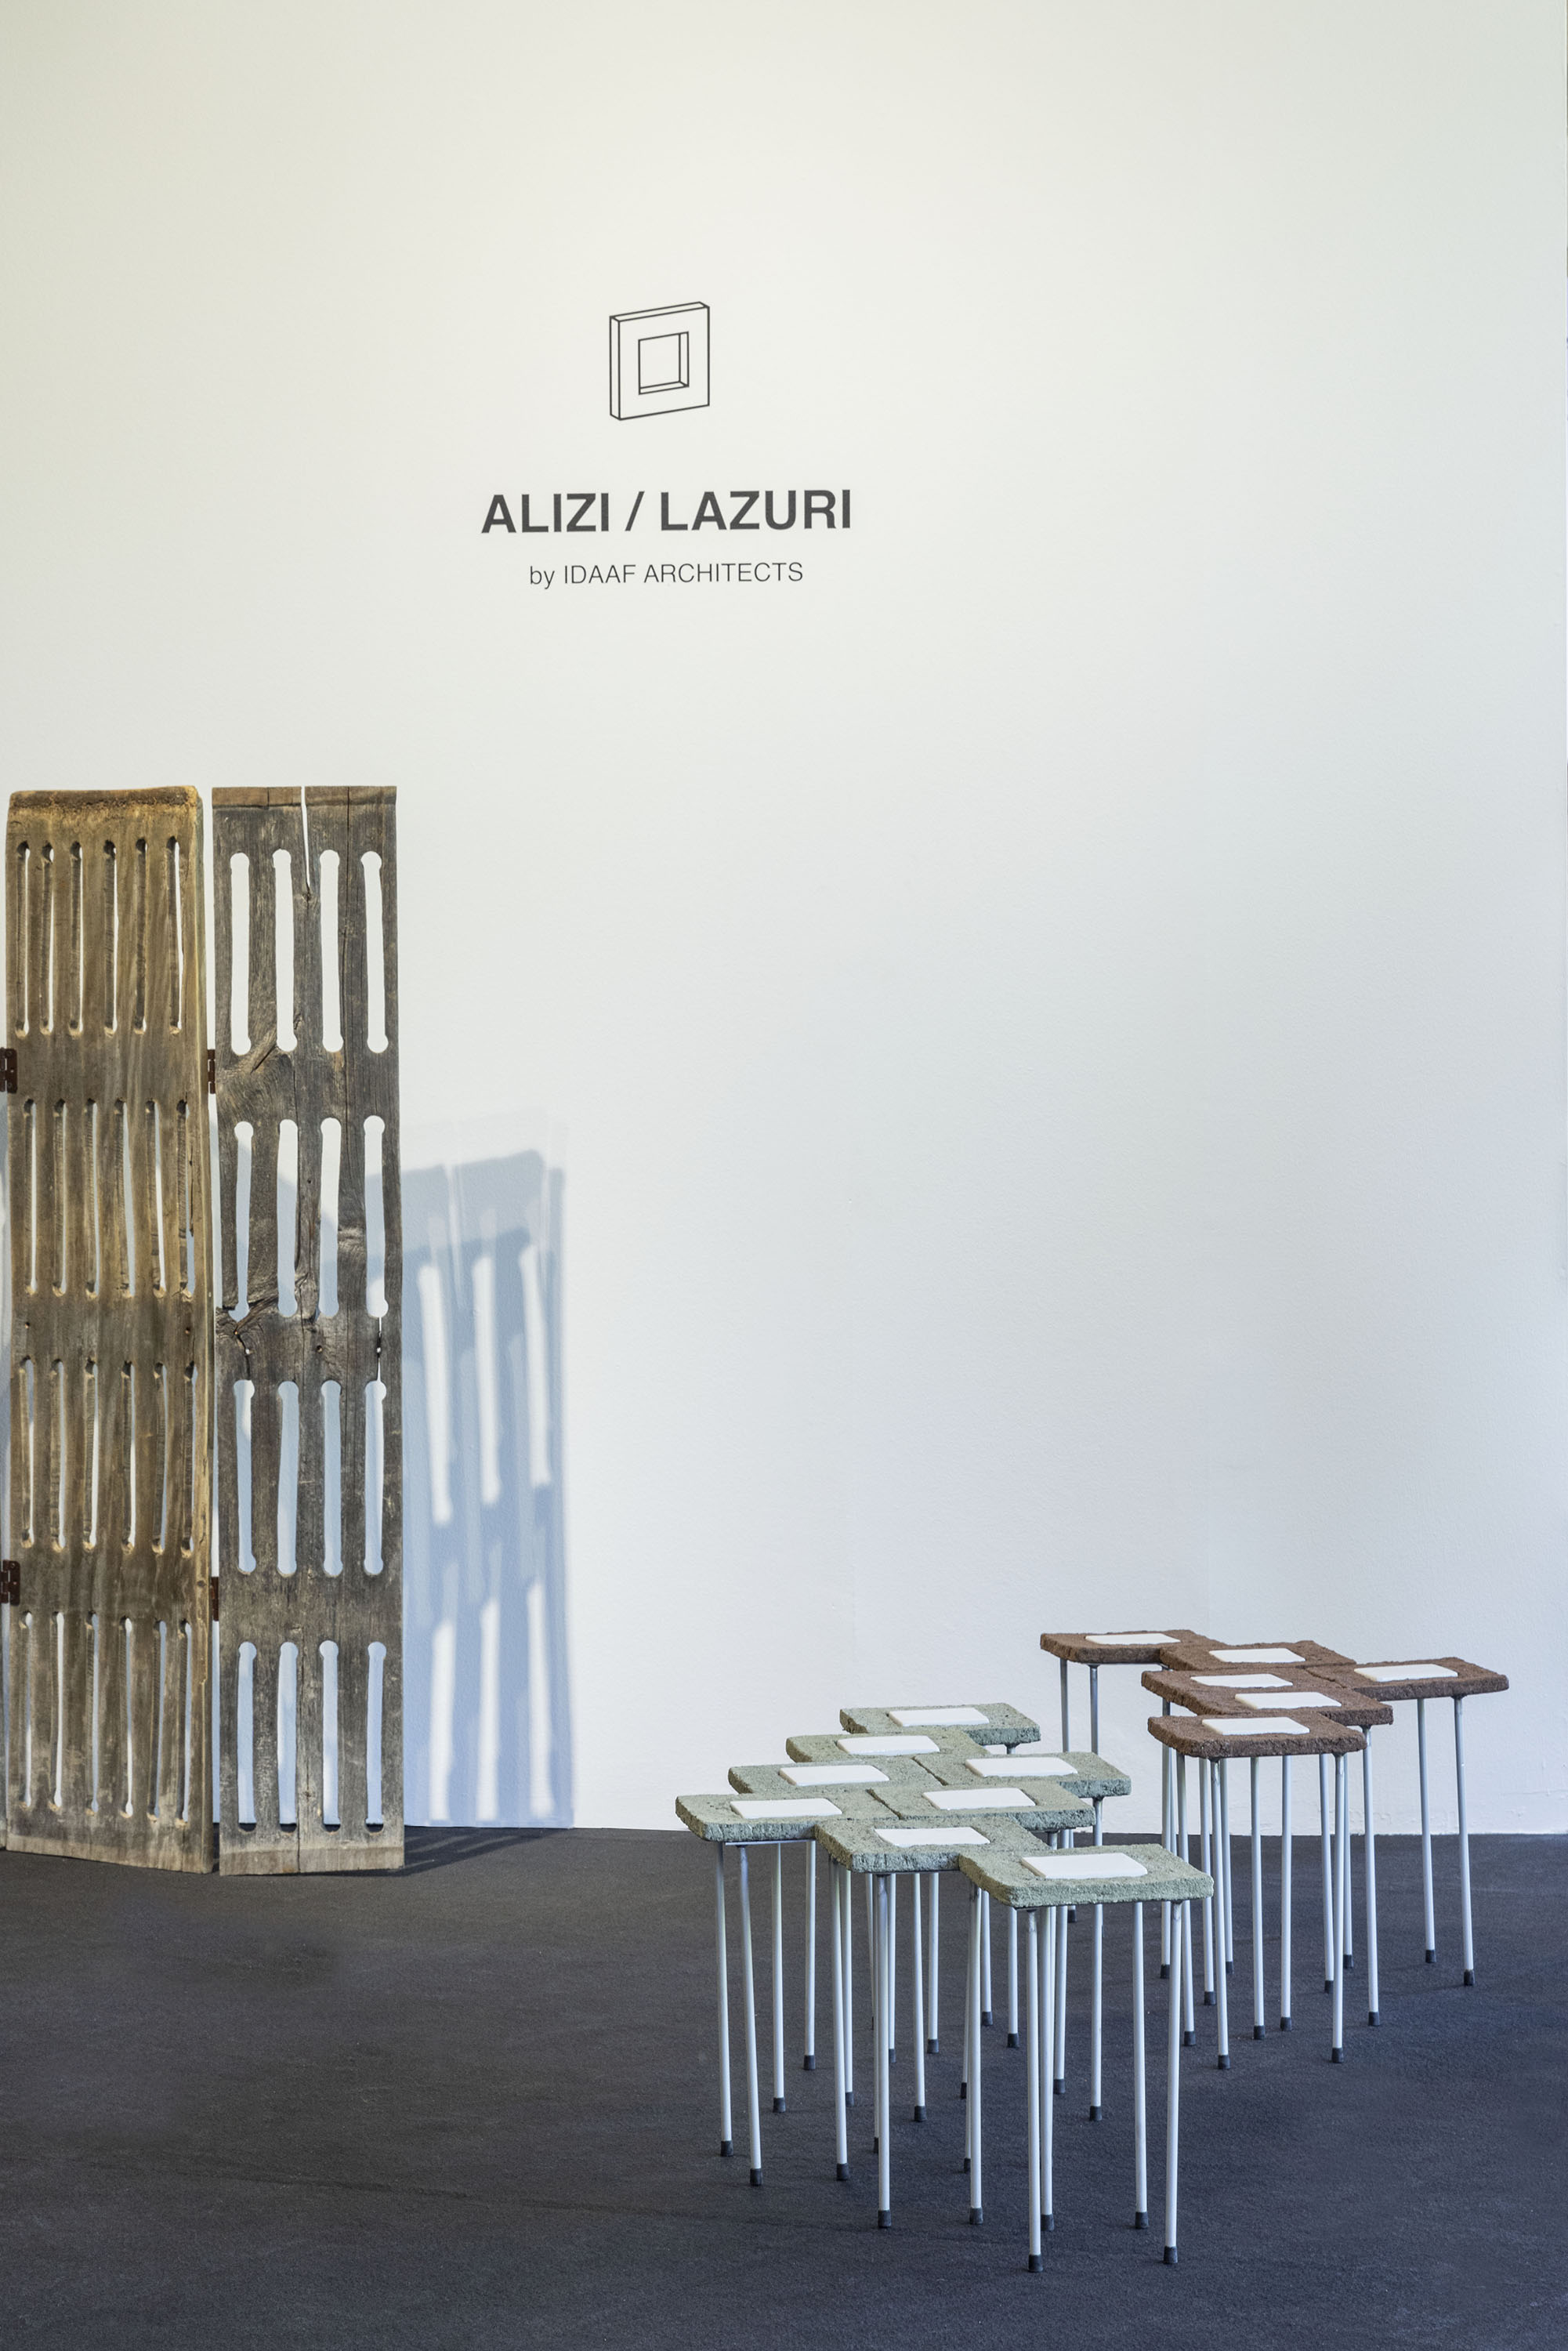 Alizi / Lazuri